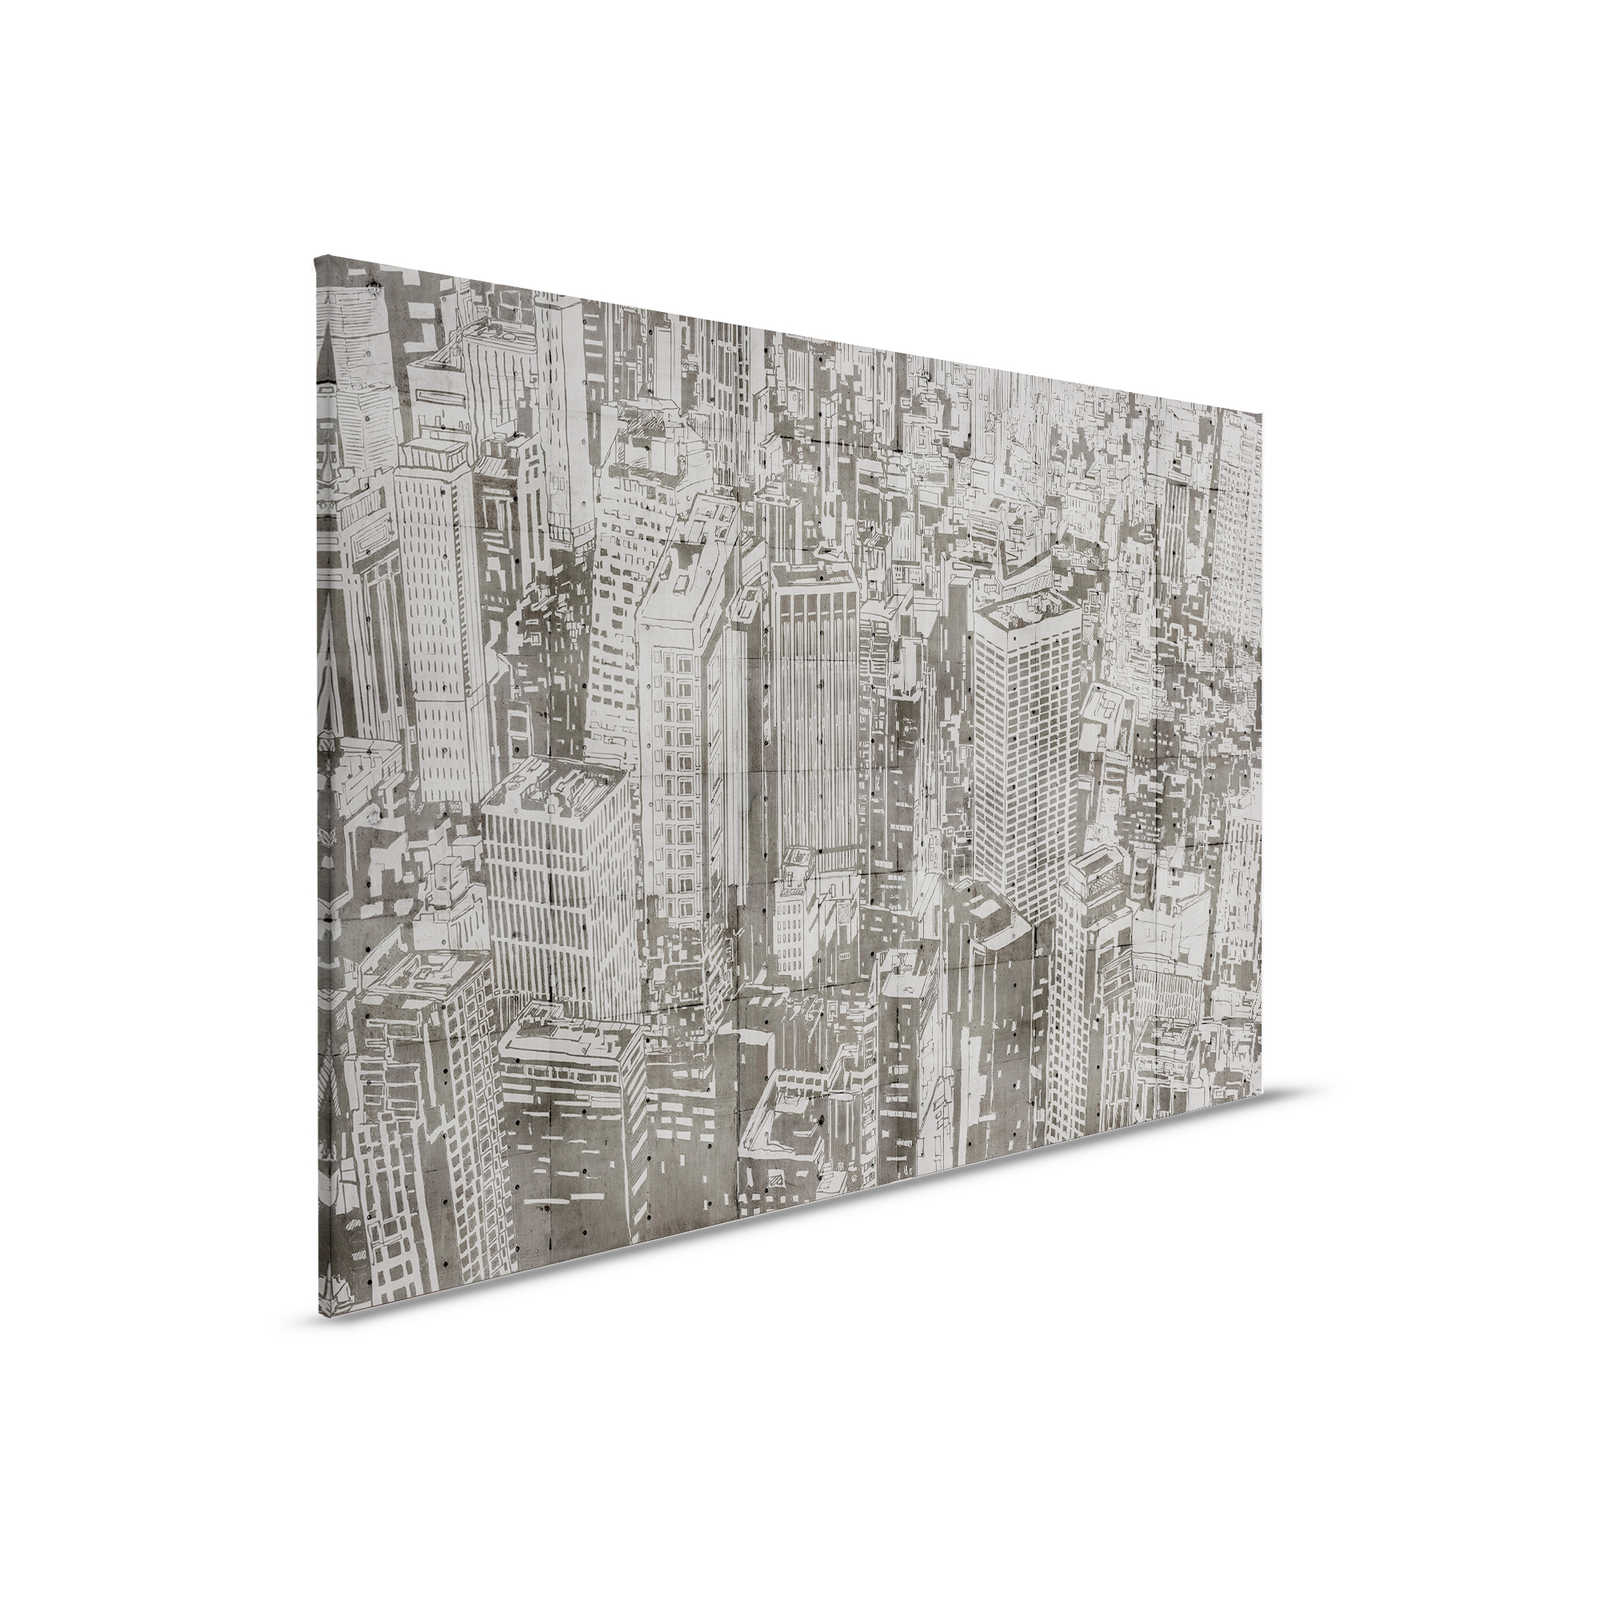 Downtown 2 - Natura qualita consistenza in cemento dipinto su tela New York Look - 0,90 m x 0,60 m
